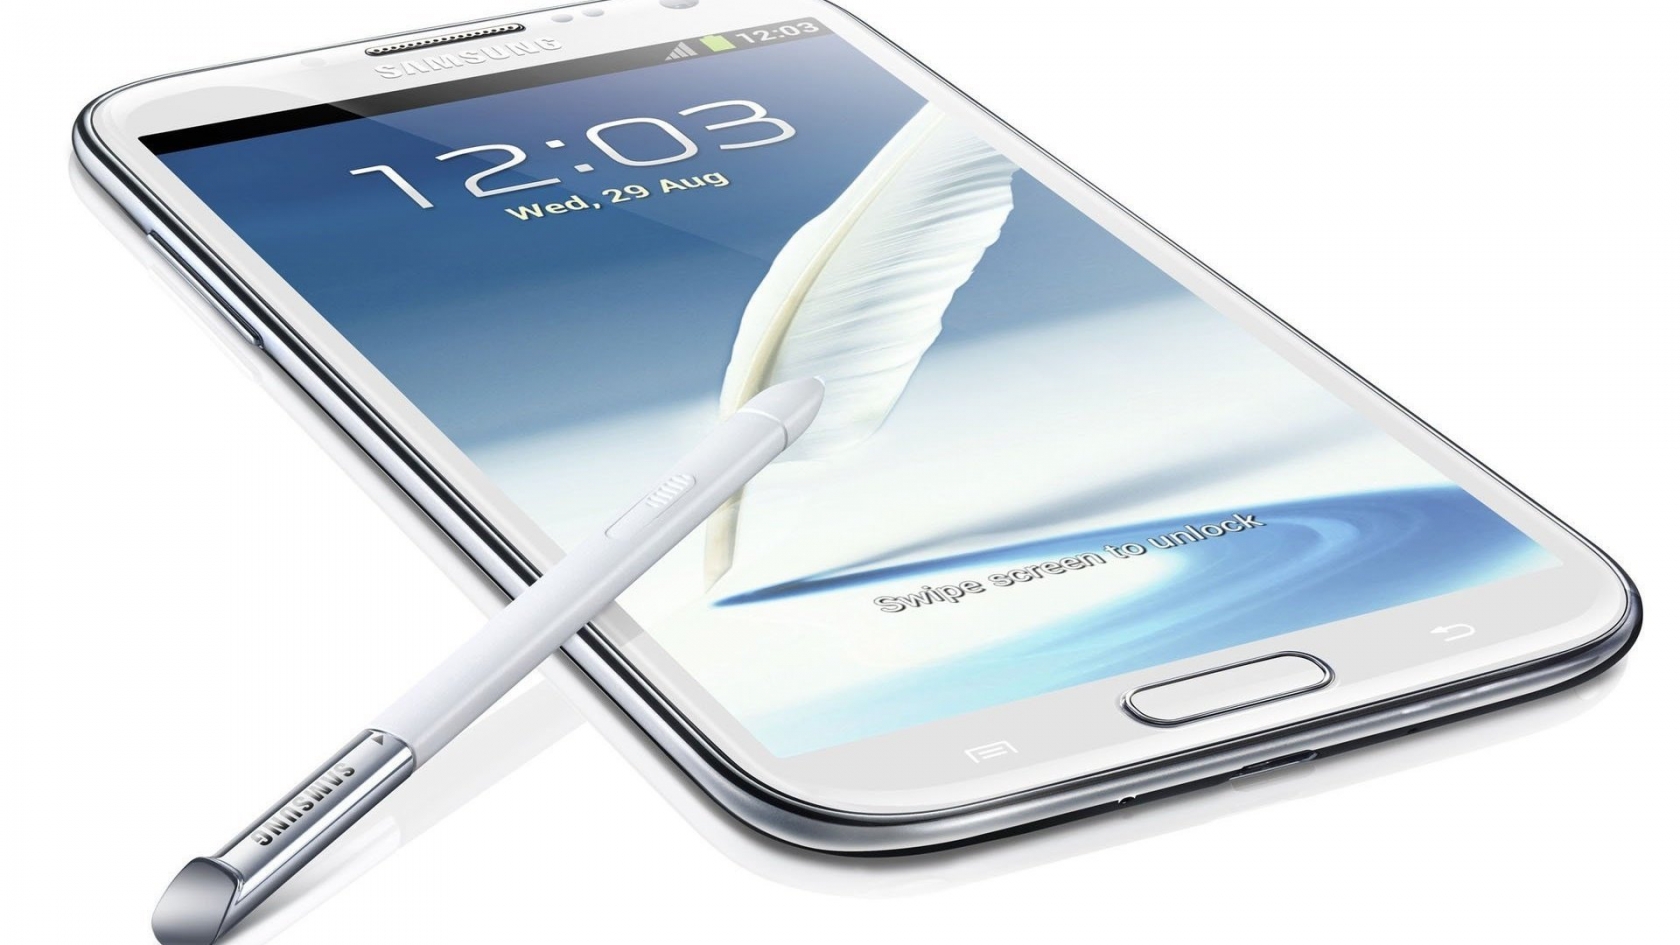 White Samsung Galaxy S3 for 1680 x 945 HDTV resolution